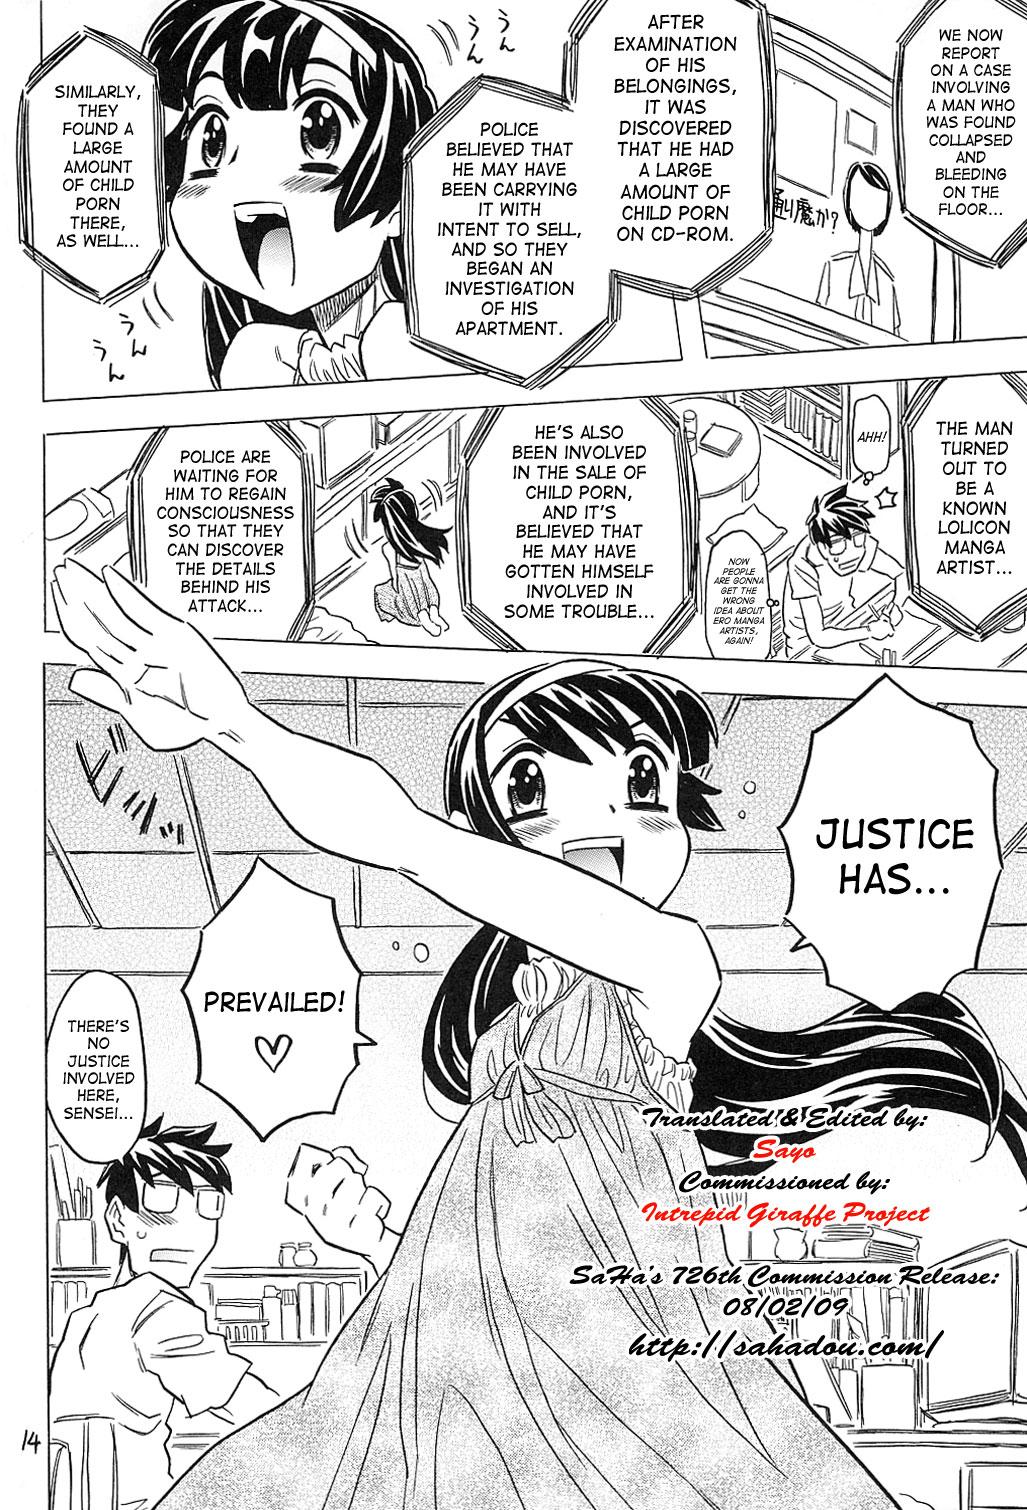 Female Ero Manga Artist Scorned 11